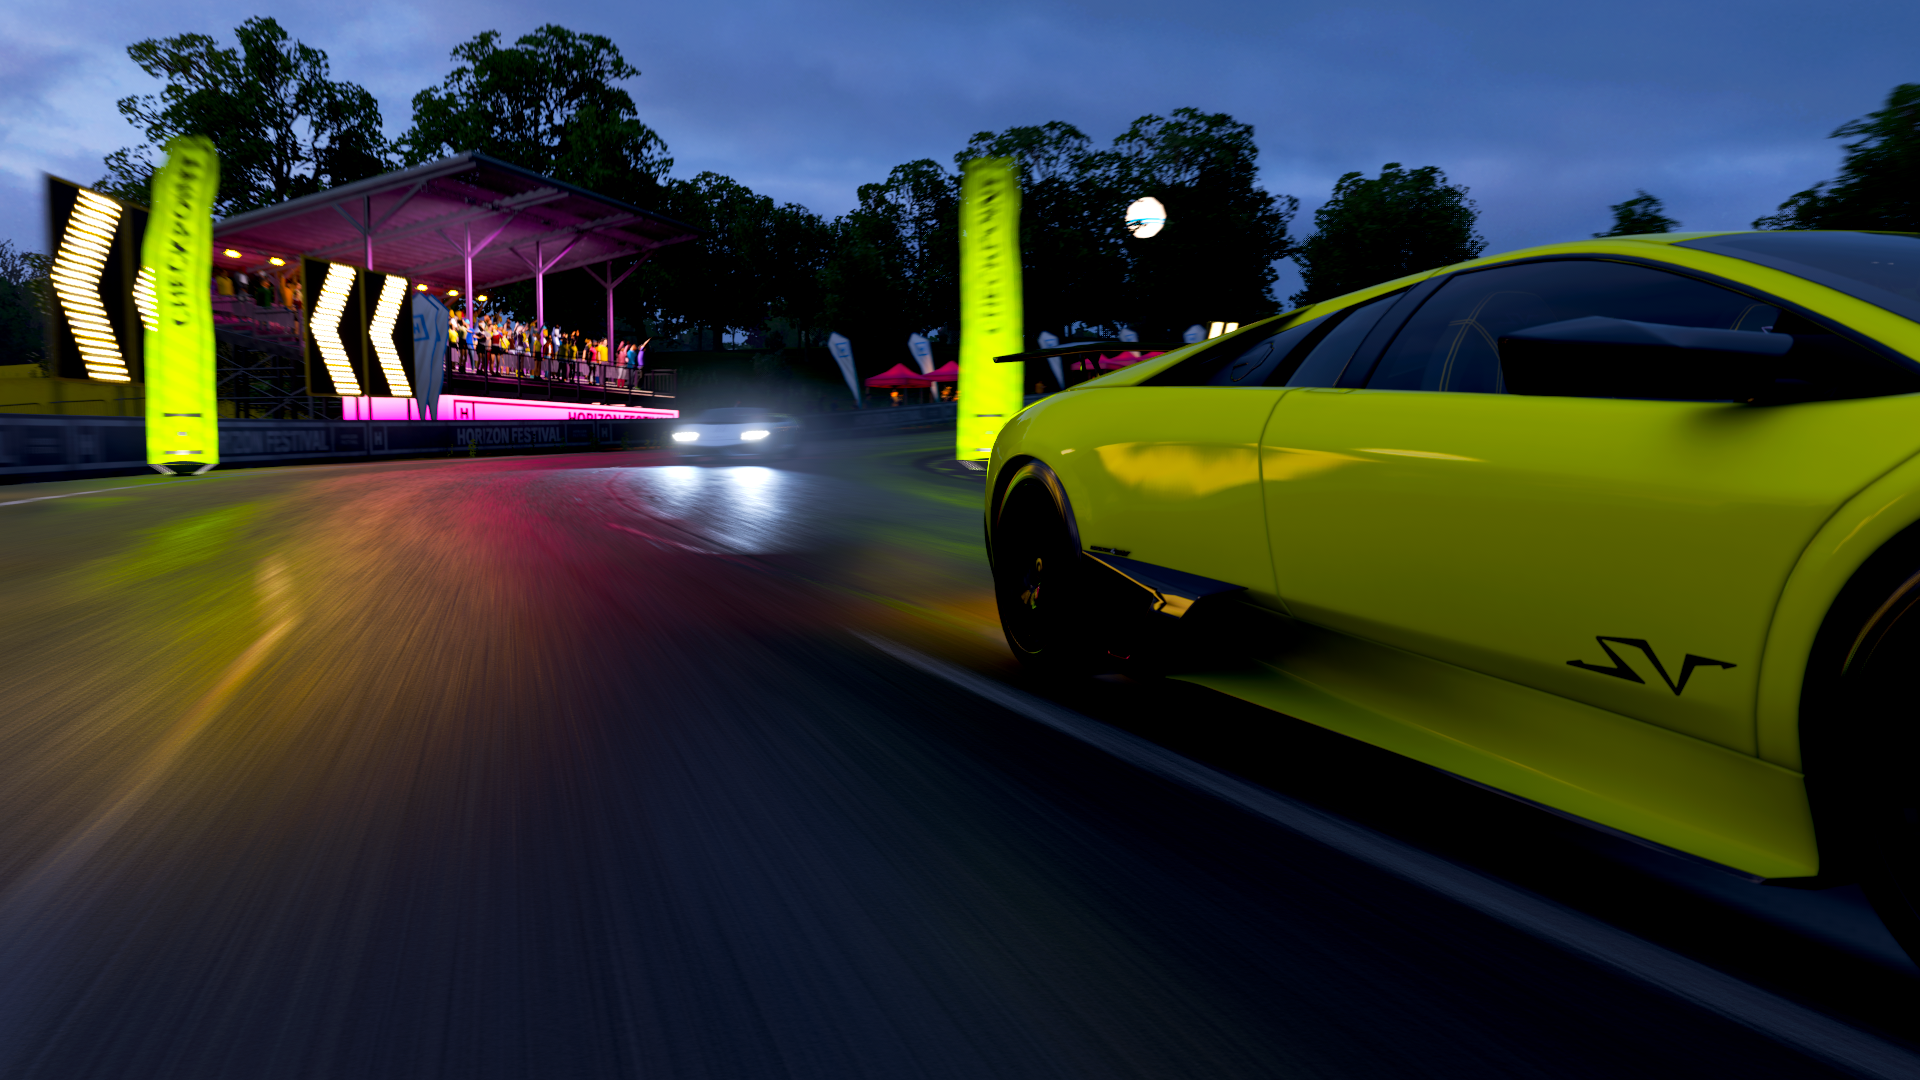 Need For Speed Hot Pursuit Lamborghini Murcielago LP 670 4 Super Veloce Video Games Car Racing Vehic 1920x1080